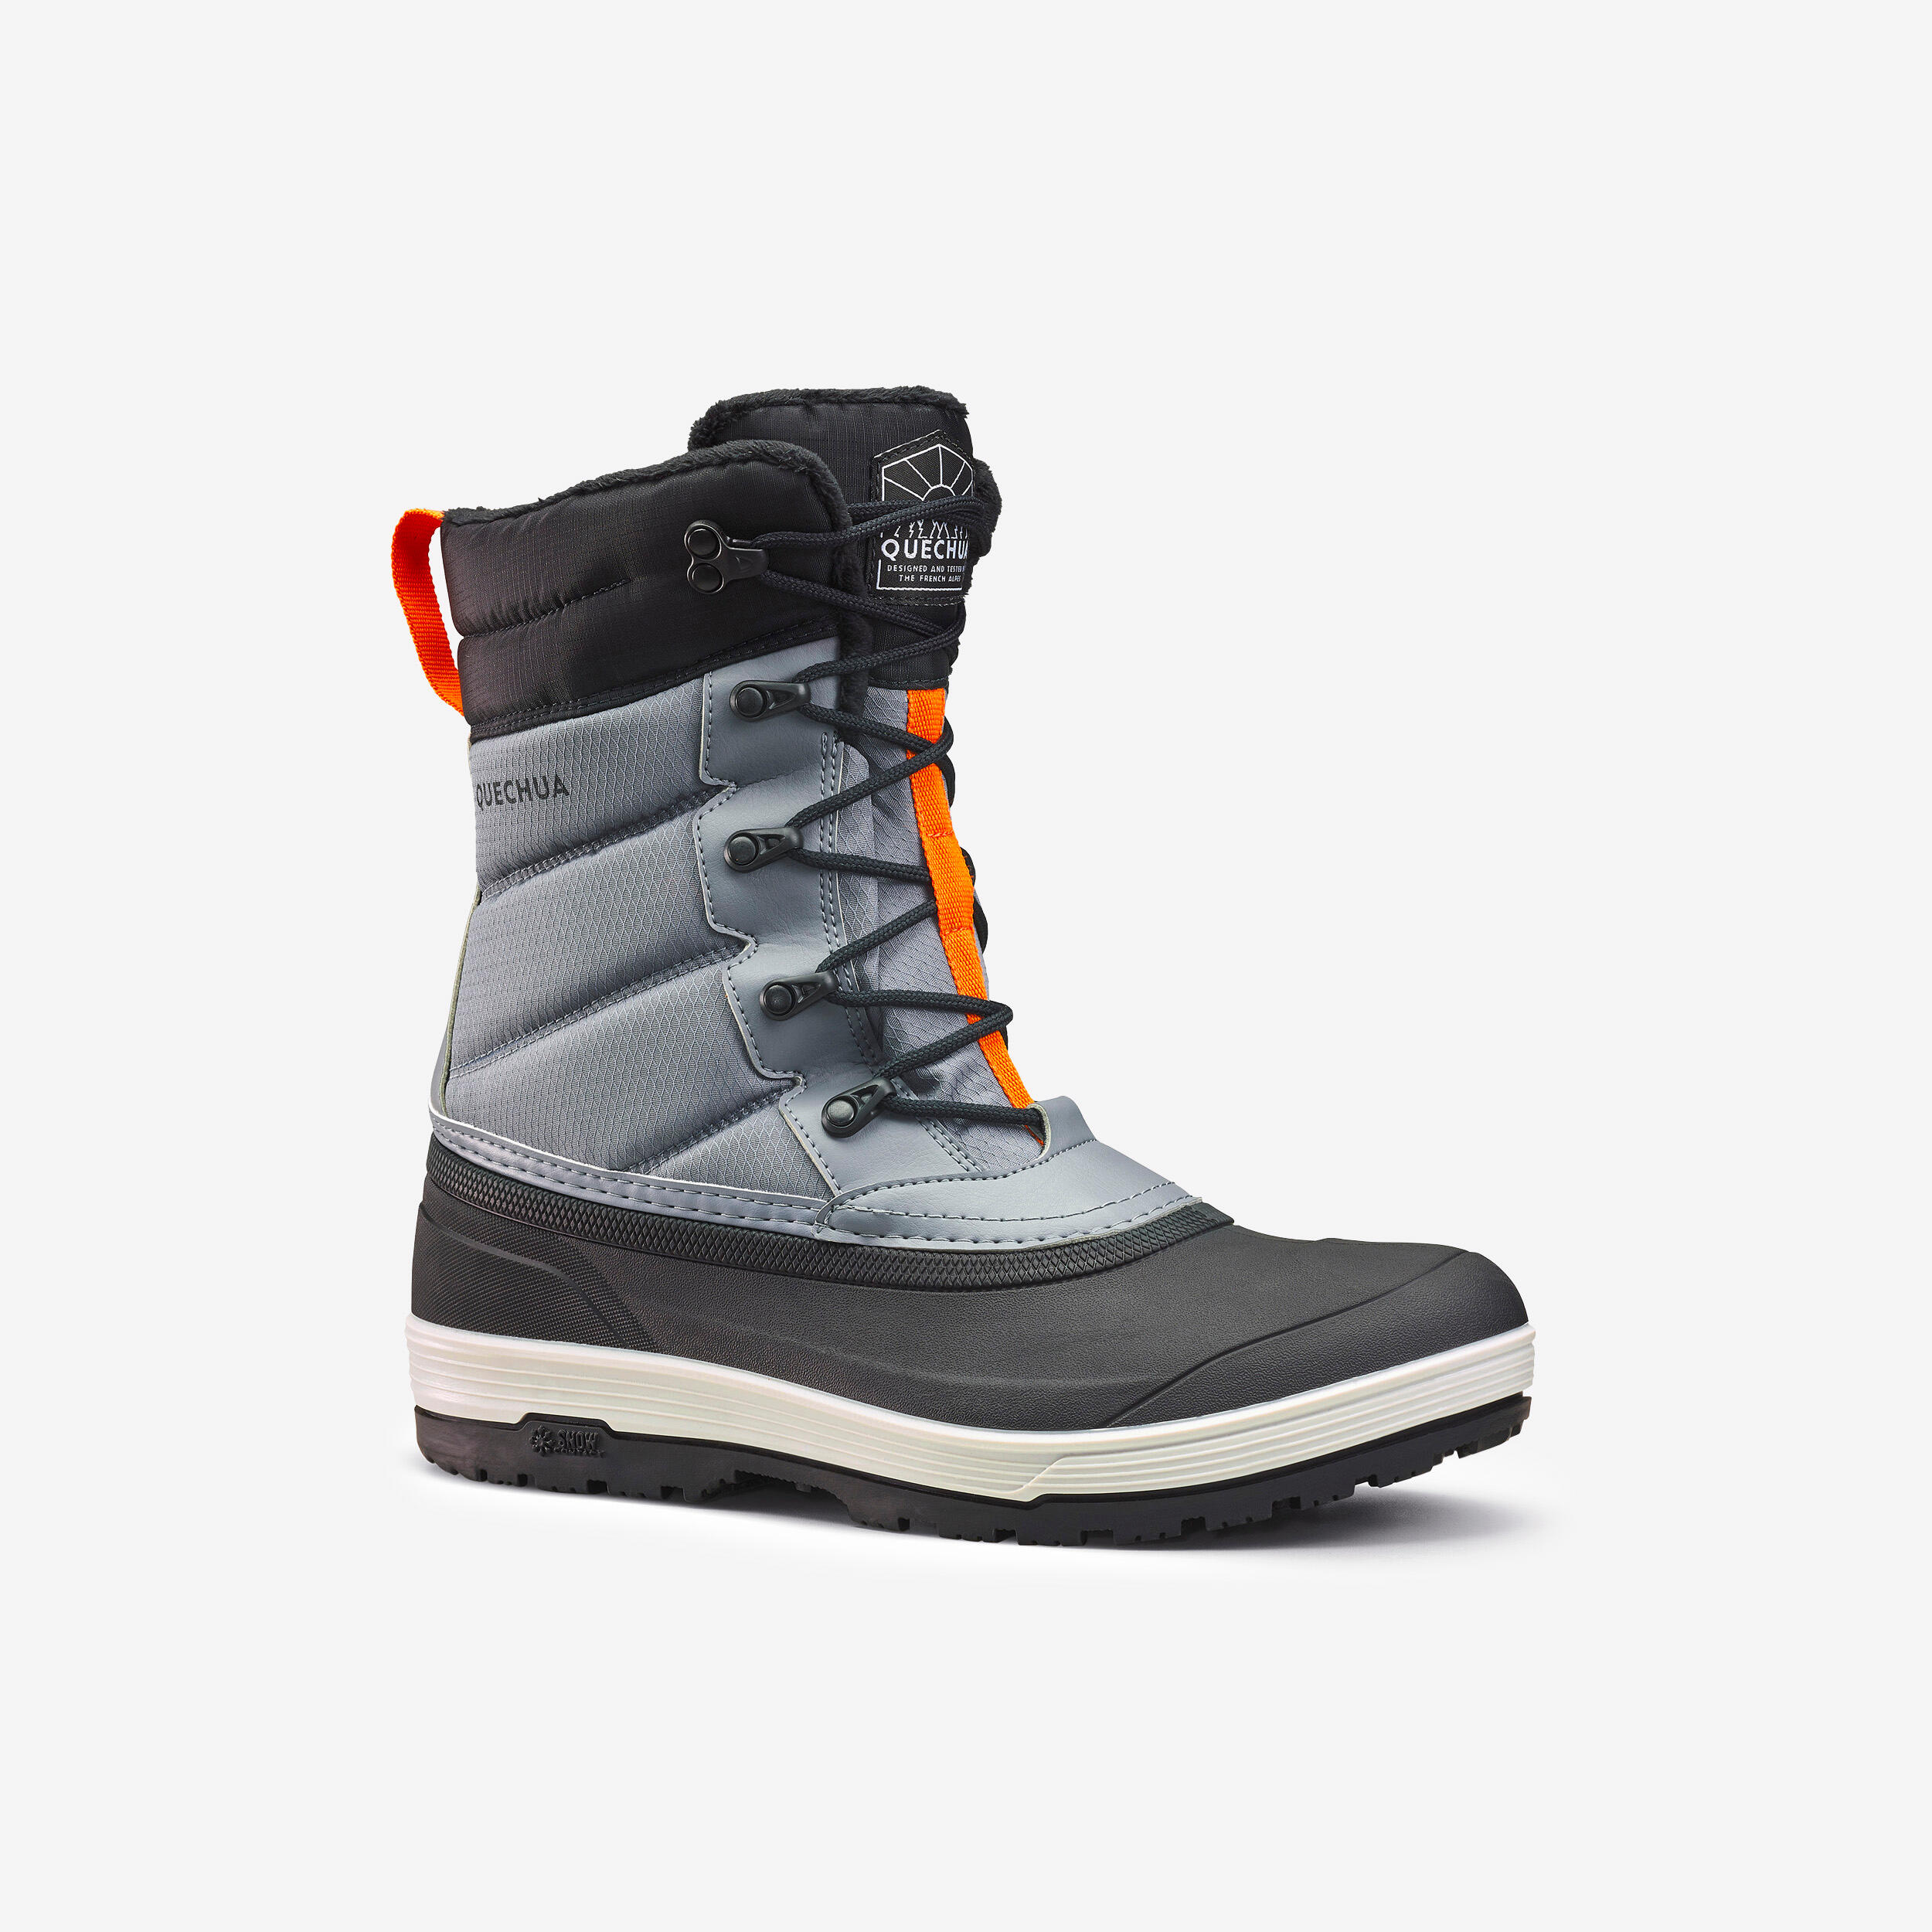 QUECHUA Men’s Warm Waterproof Snow Hiking Boots  - SH500 X- WARM - Lace